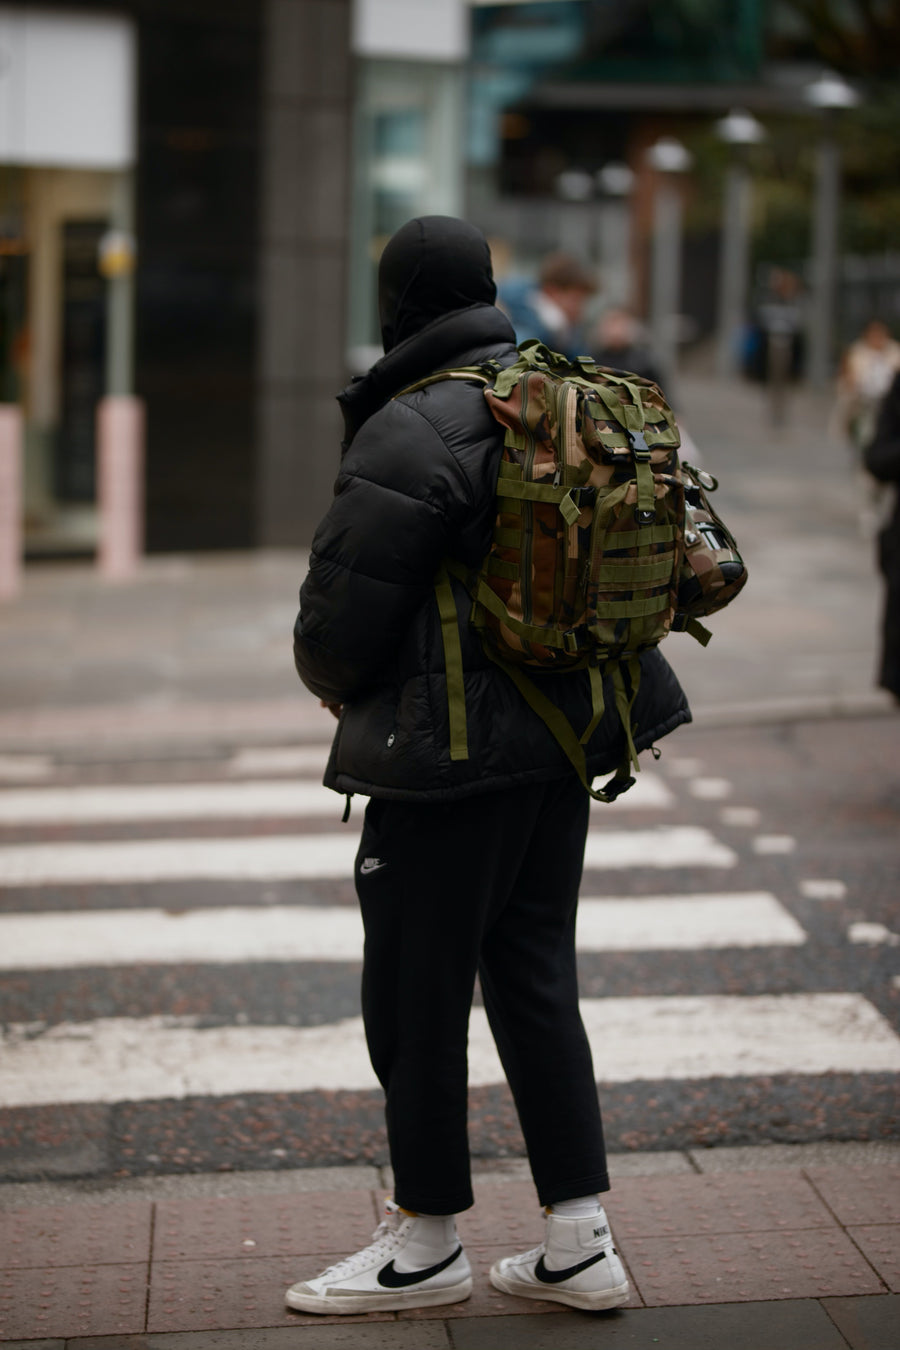 Olokun Green Camo medium-sized Tactical Molle Backpack